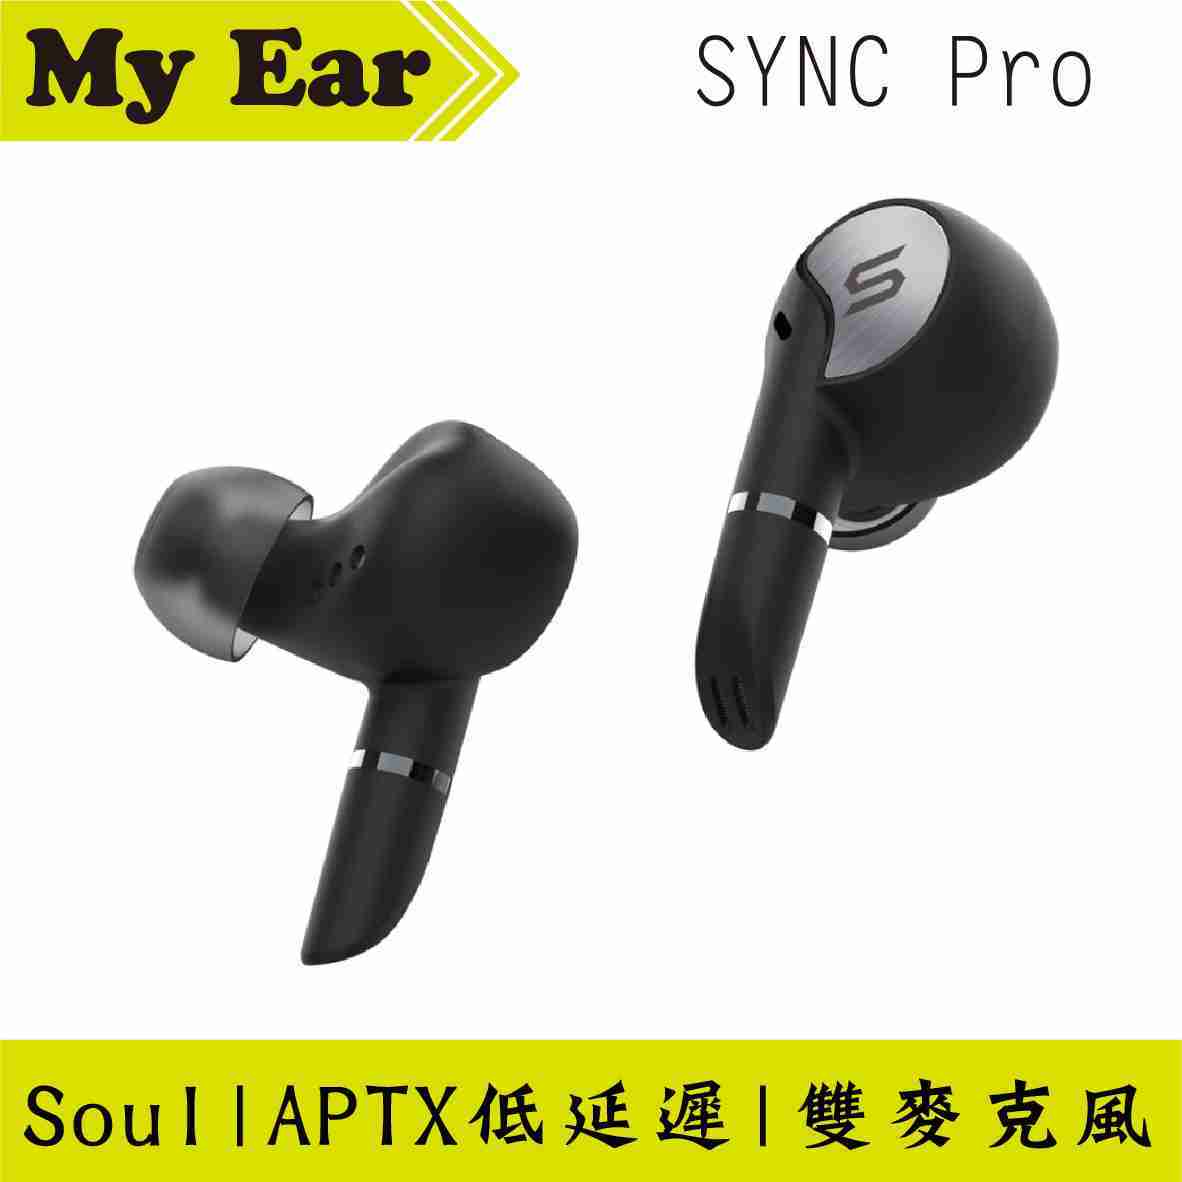 Soul SYNC Pro 黑 雙Mic降噪 真無線藍芽耳機 | My Ear耳機專門店